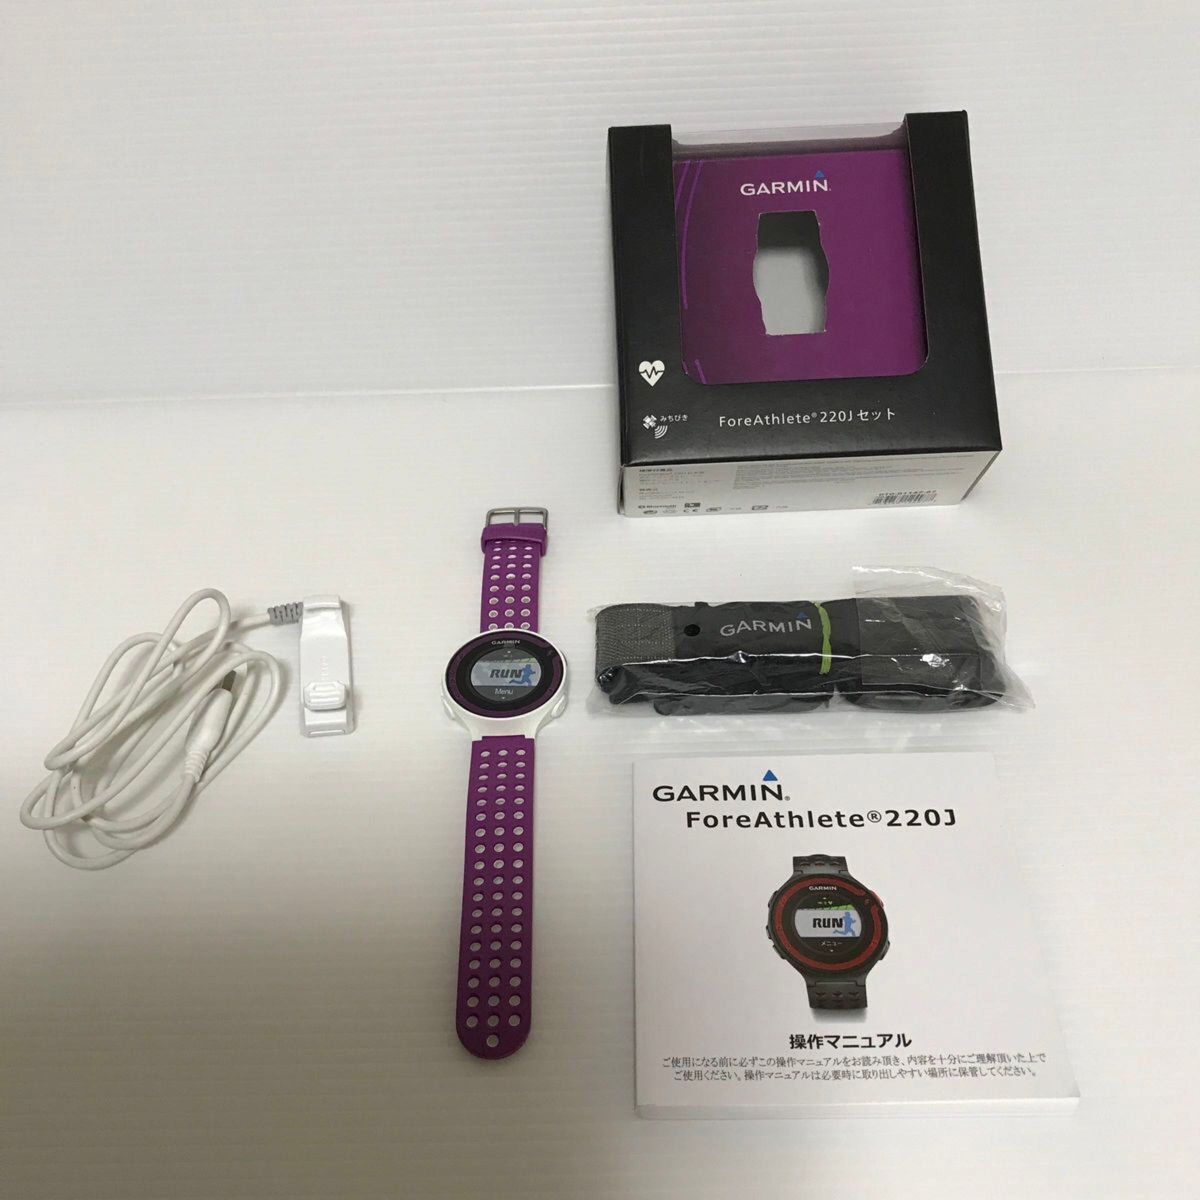 GARMIN(ガーミン) ランニング 時計 GPS ForeAthlete 220Jセット Bluetooth対応 【日本正規品】